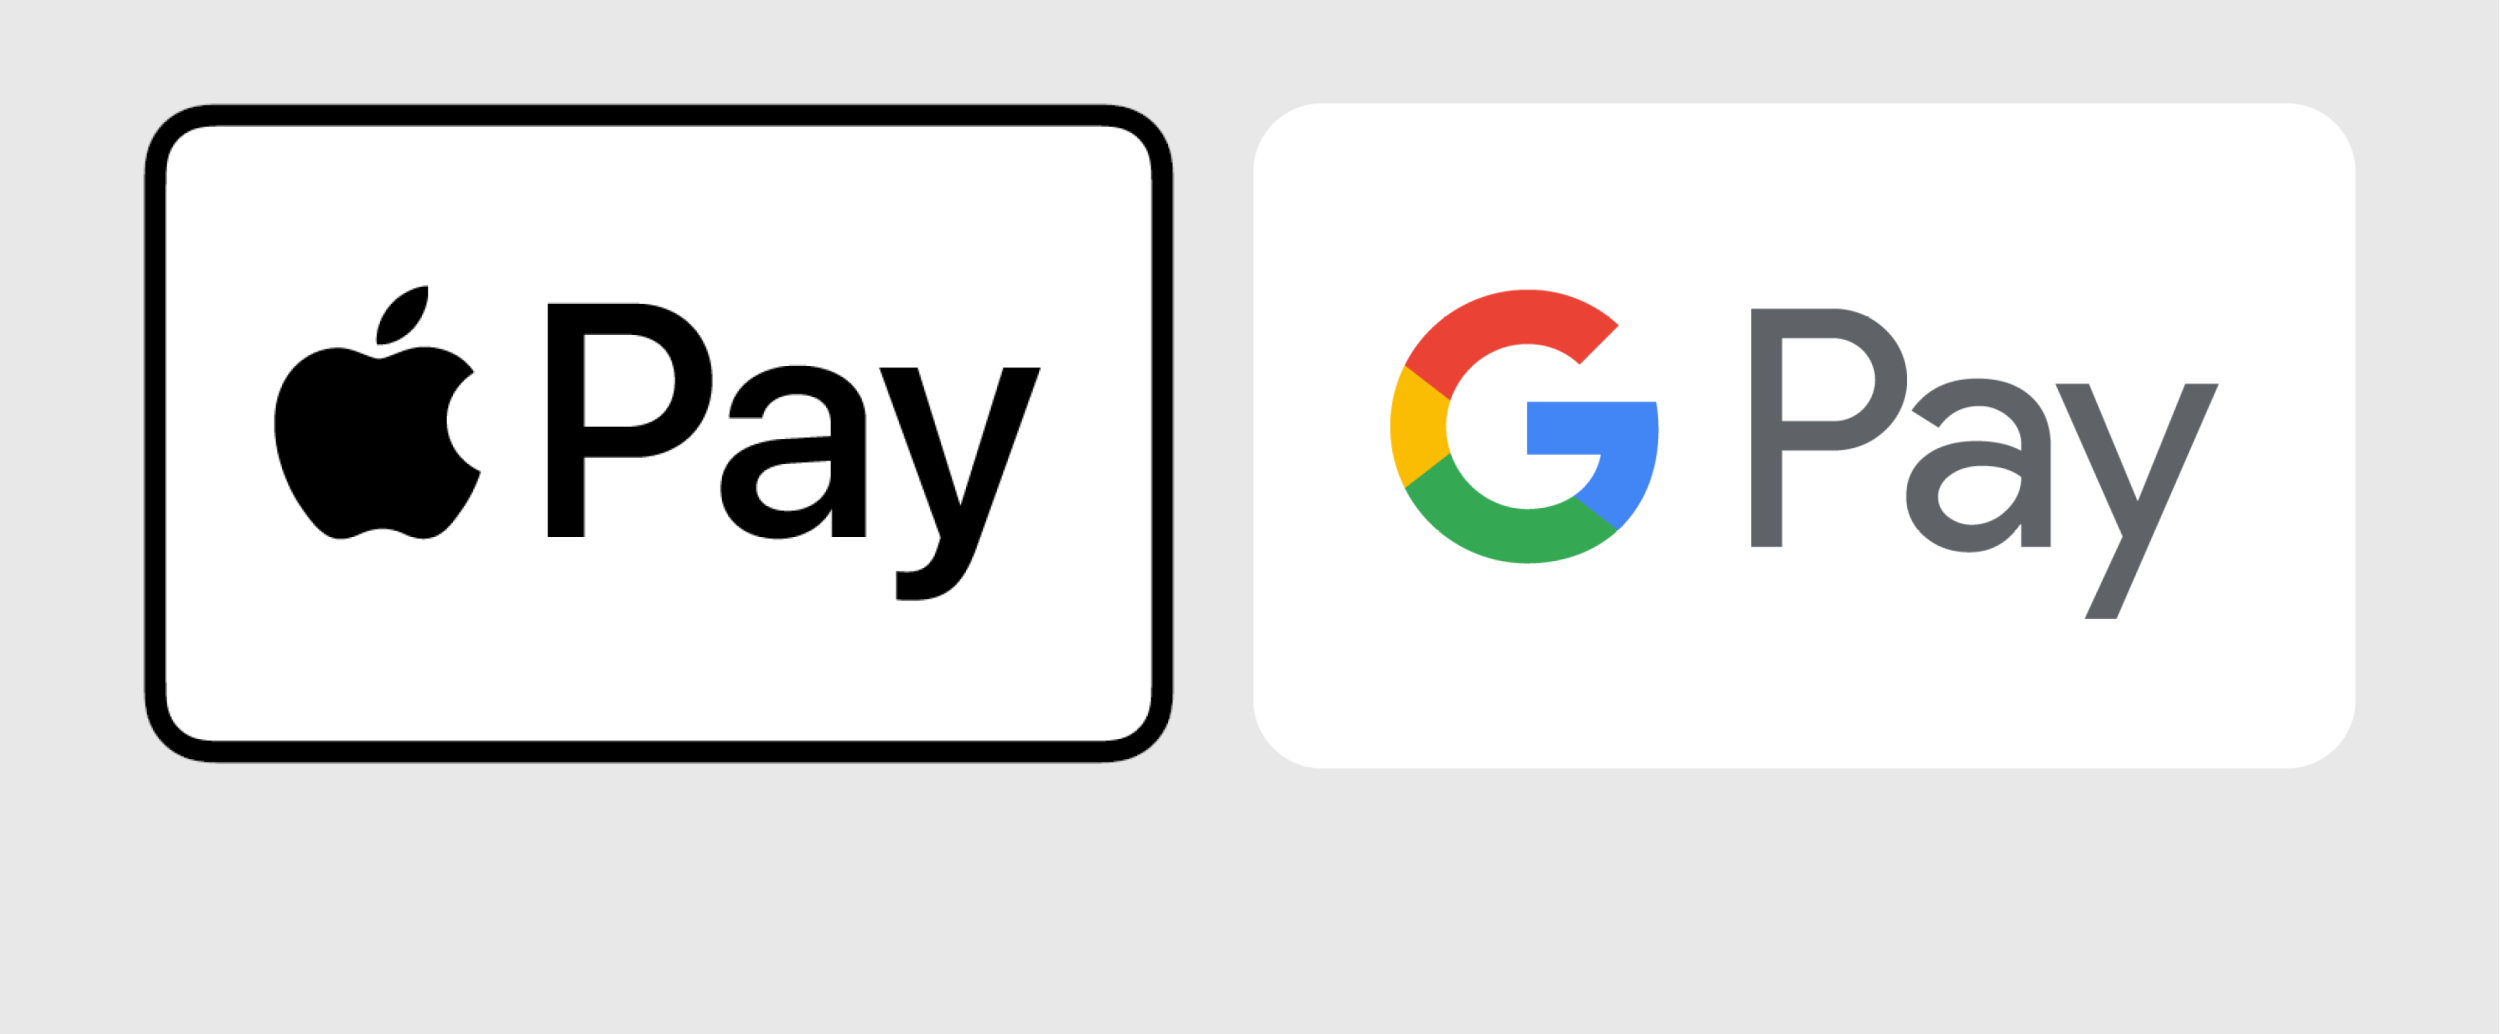 Google Pay Logo - Mobile Wallet State Bank